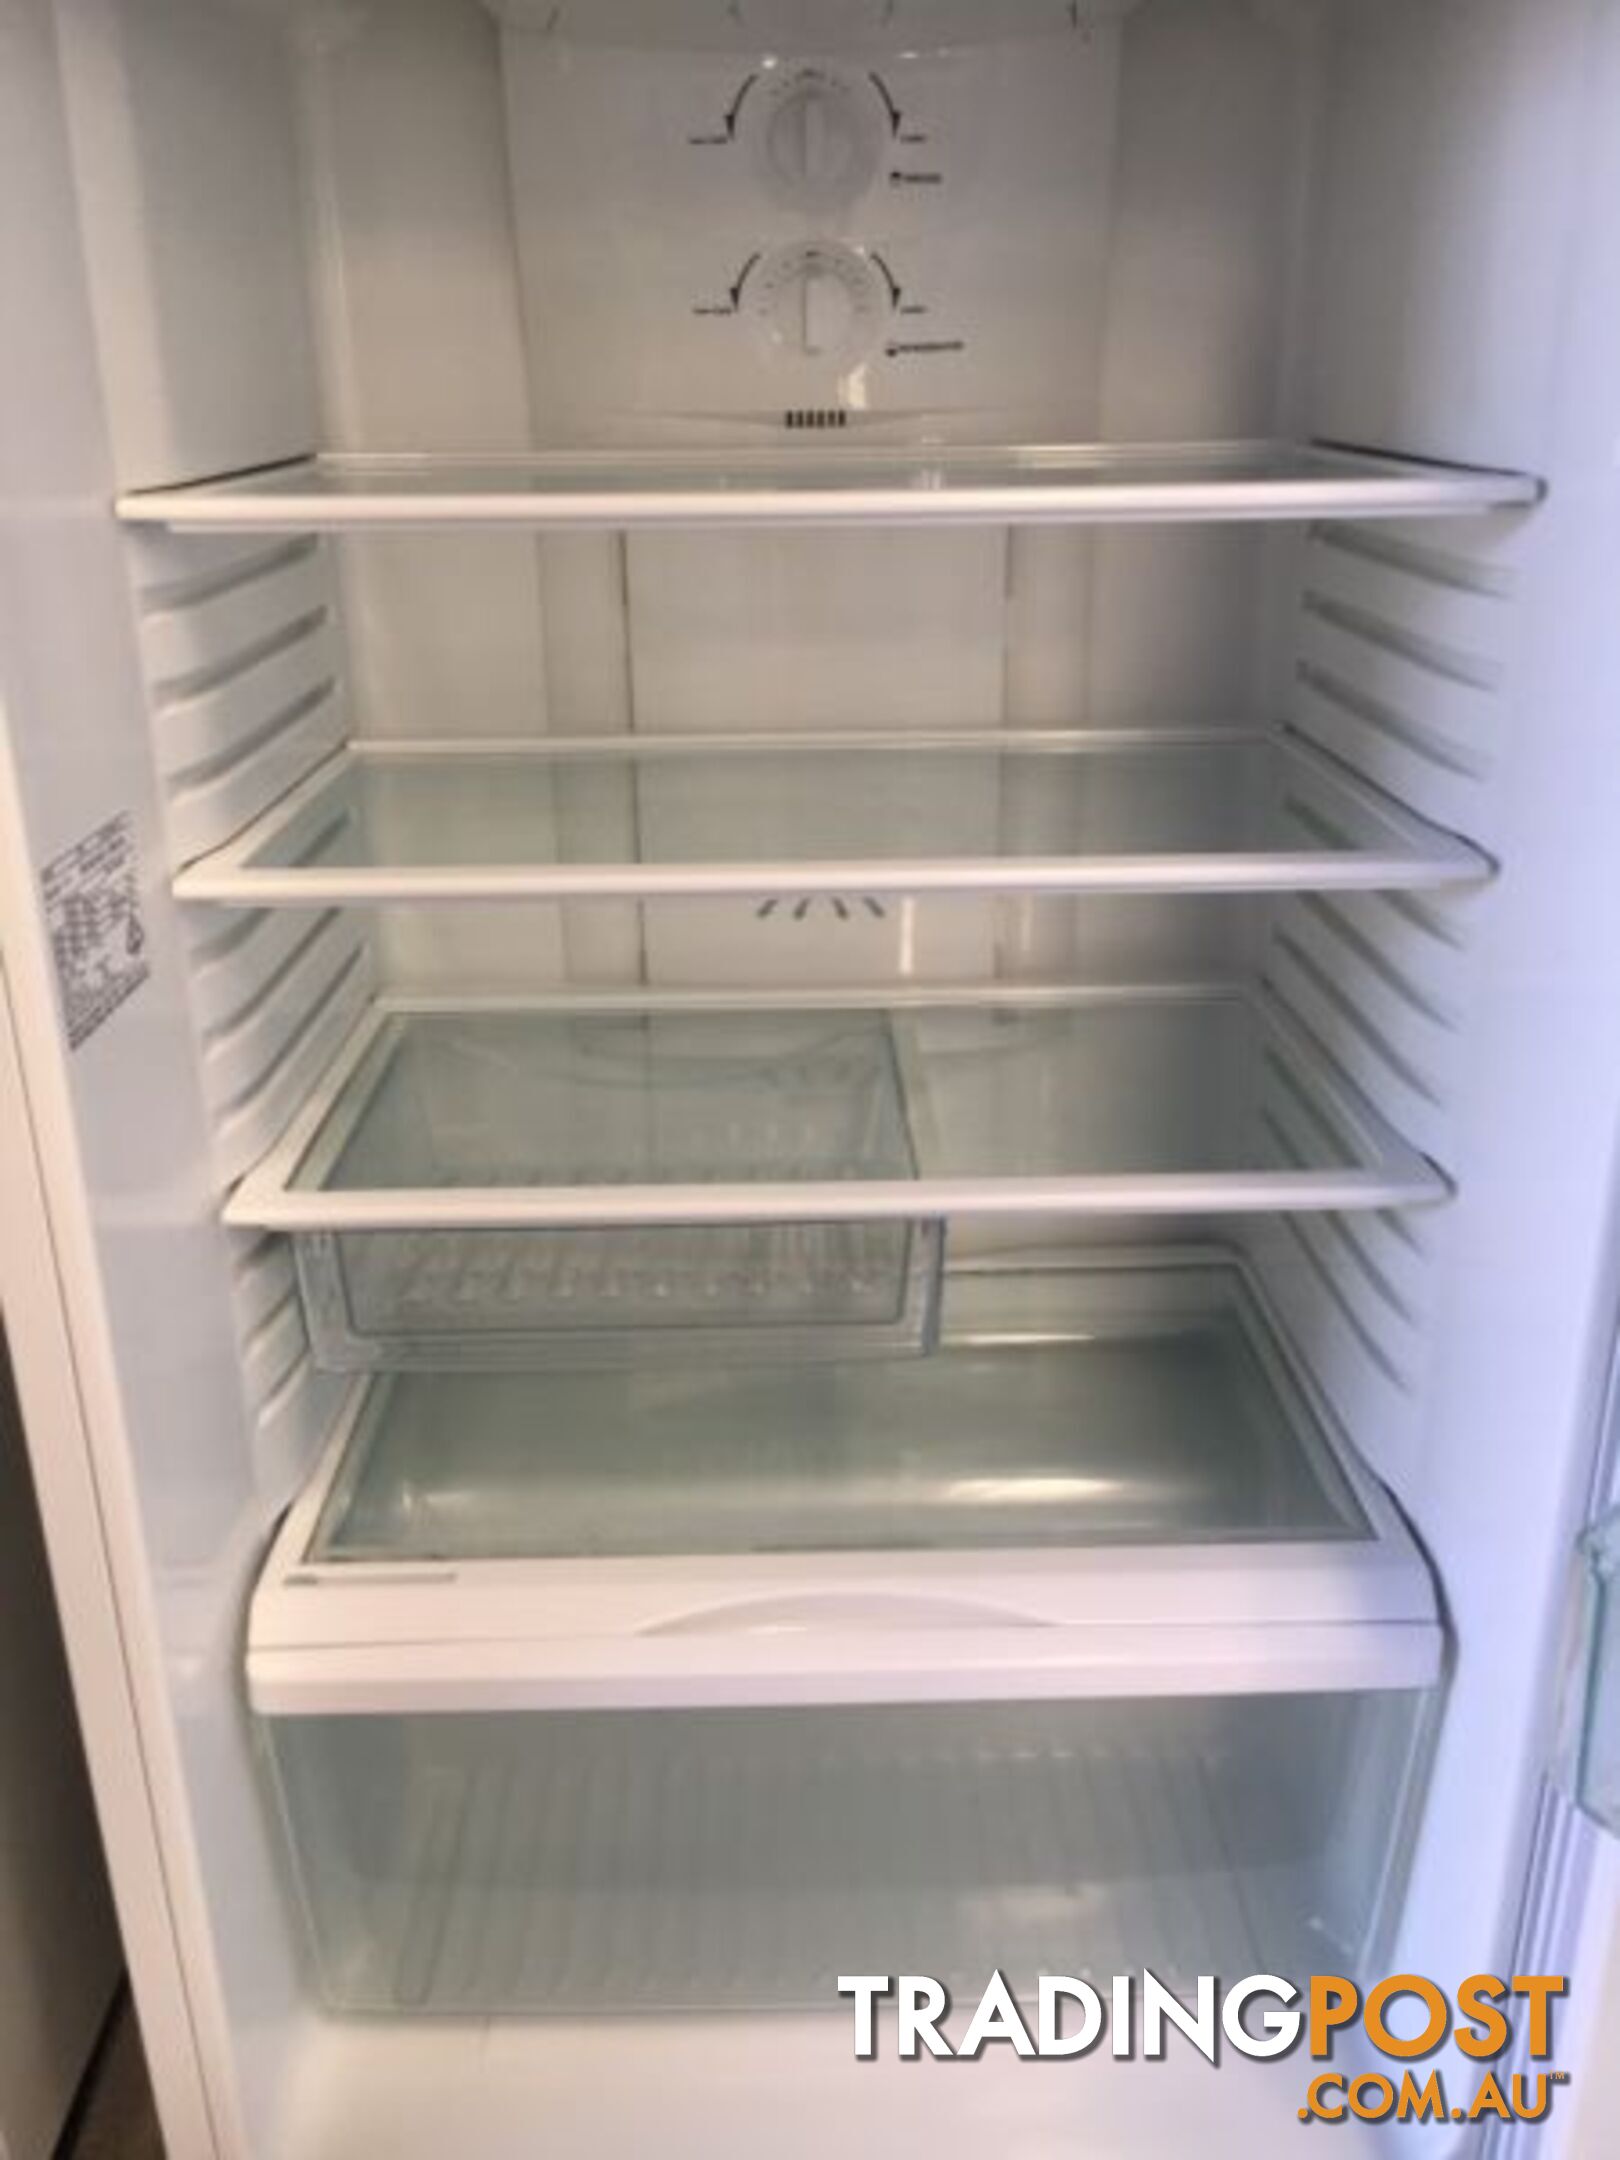 390l Westinghouse fridge freezer DELIVERY WARRANTY